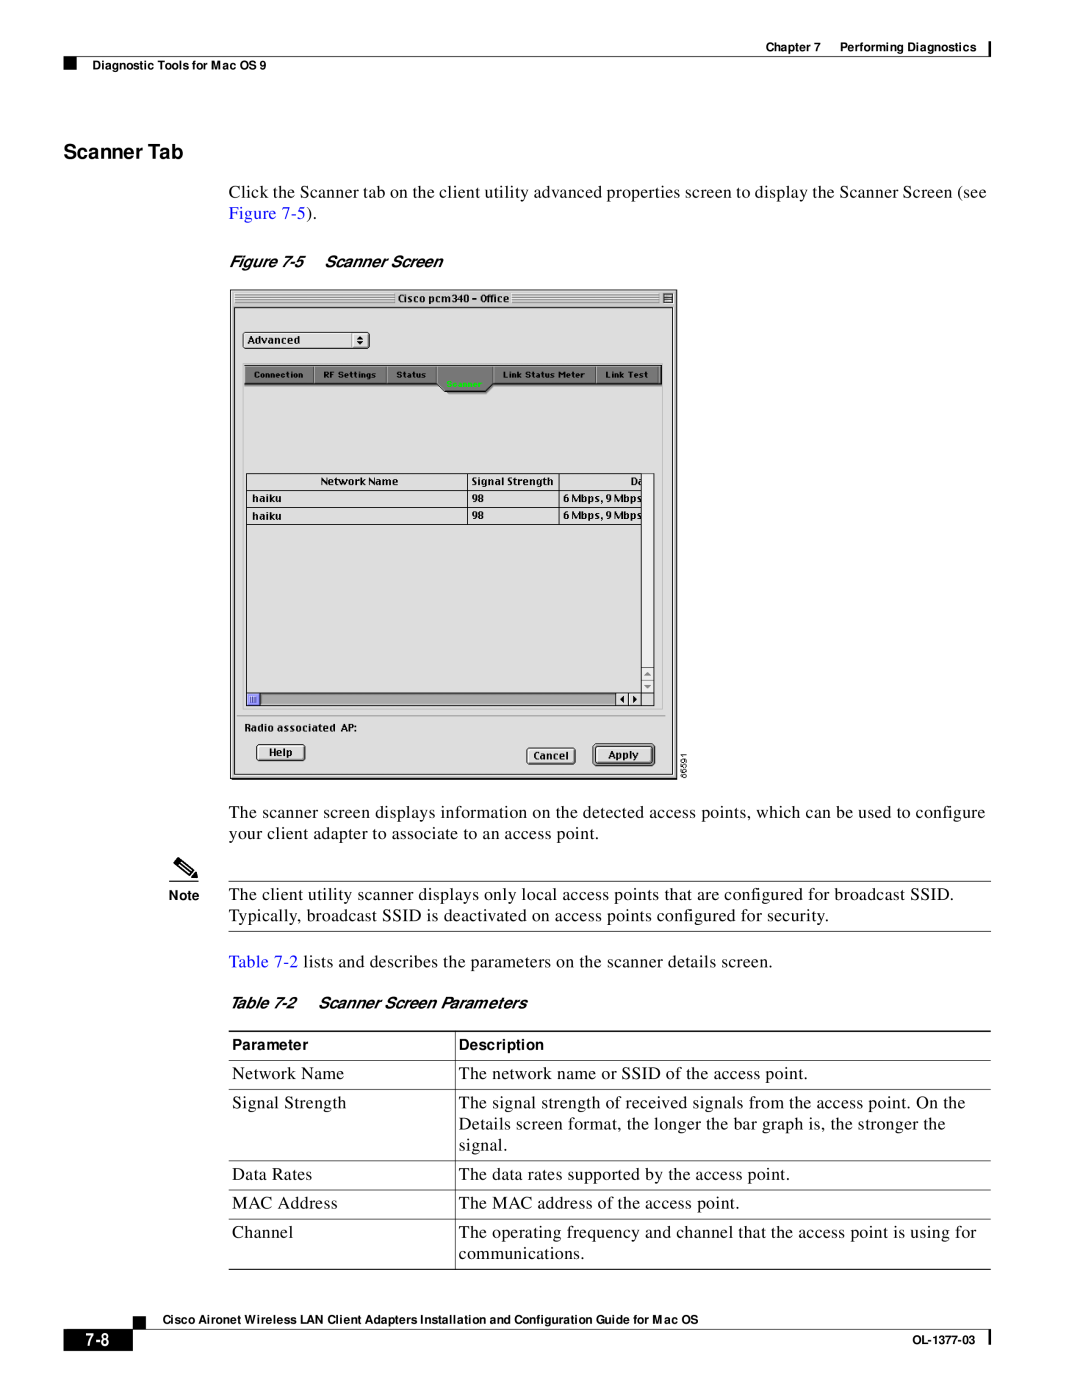 Cisco Systems OL-1377-03 manual Scanner Tab, Description, 5 Scanner Screen, 2 Scanner Screen Parameters 